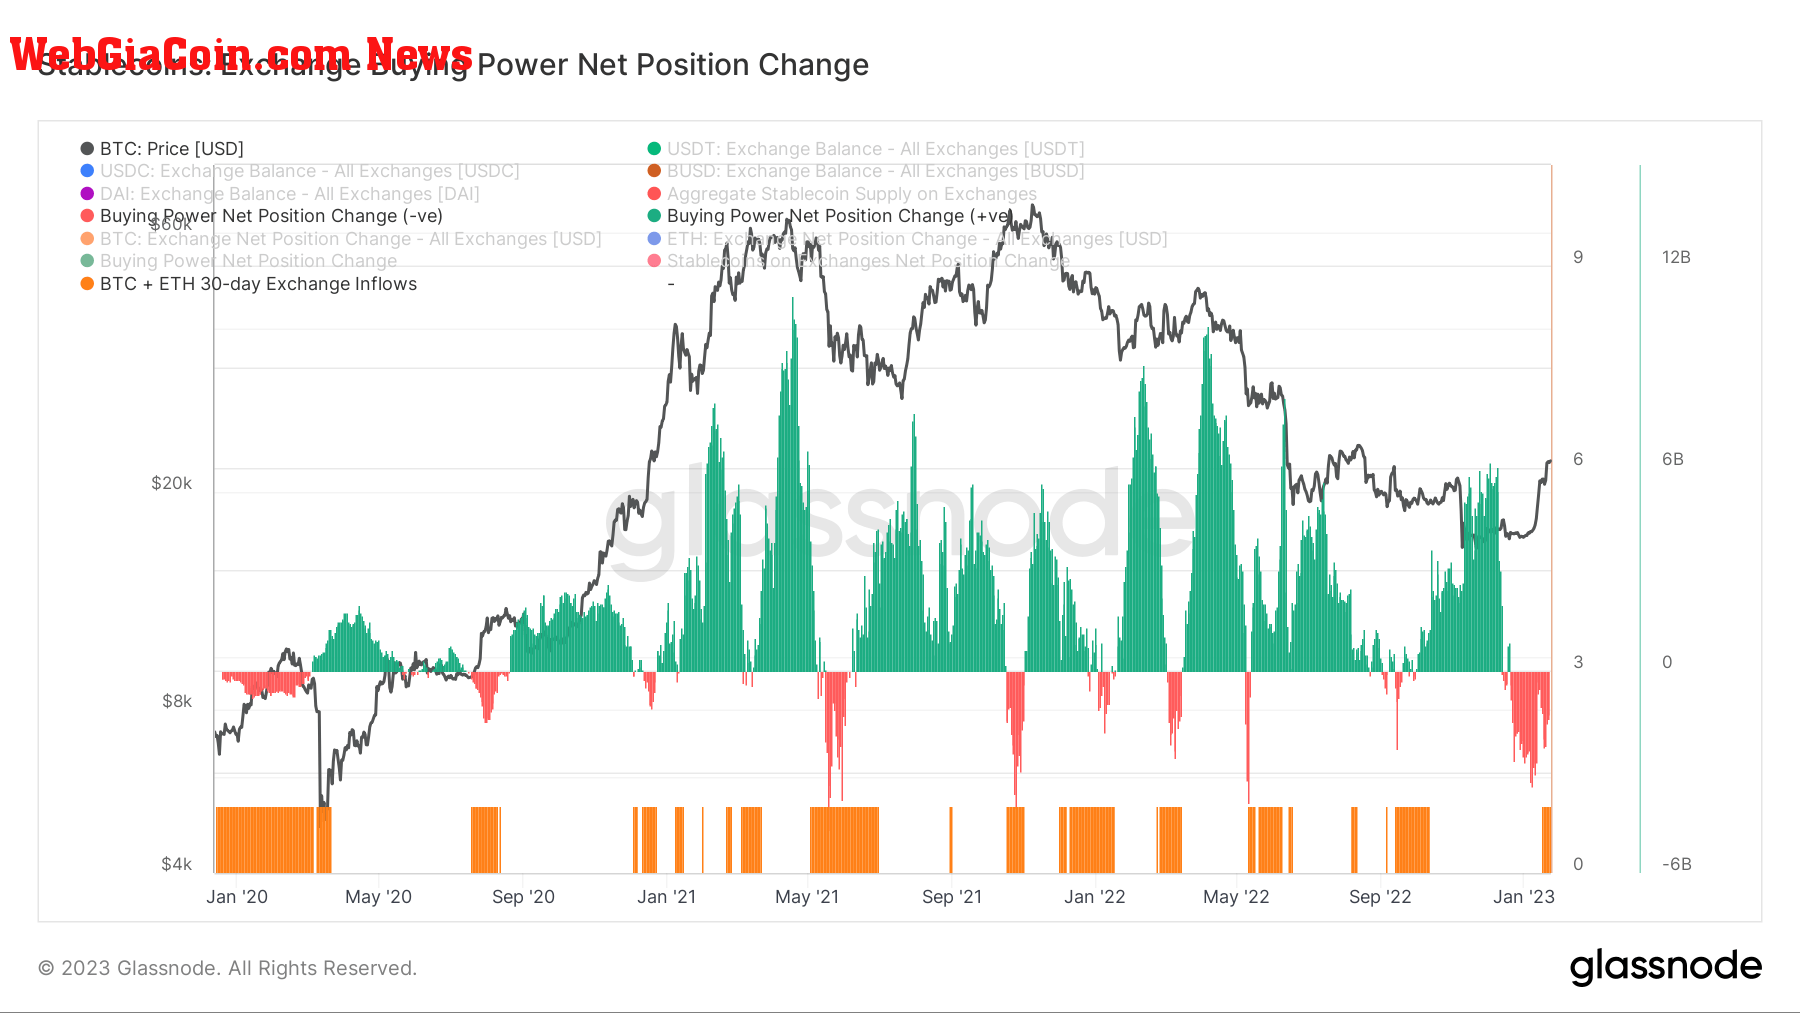 Exchange buying power net position change: (Source: Glassnode)